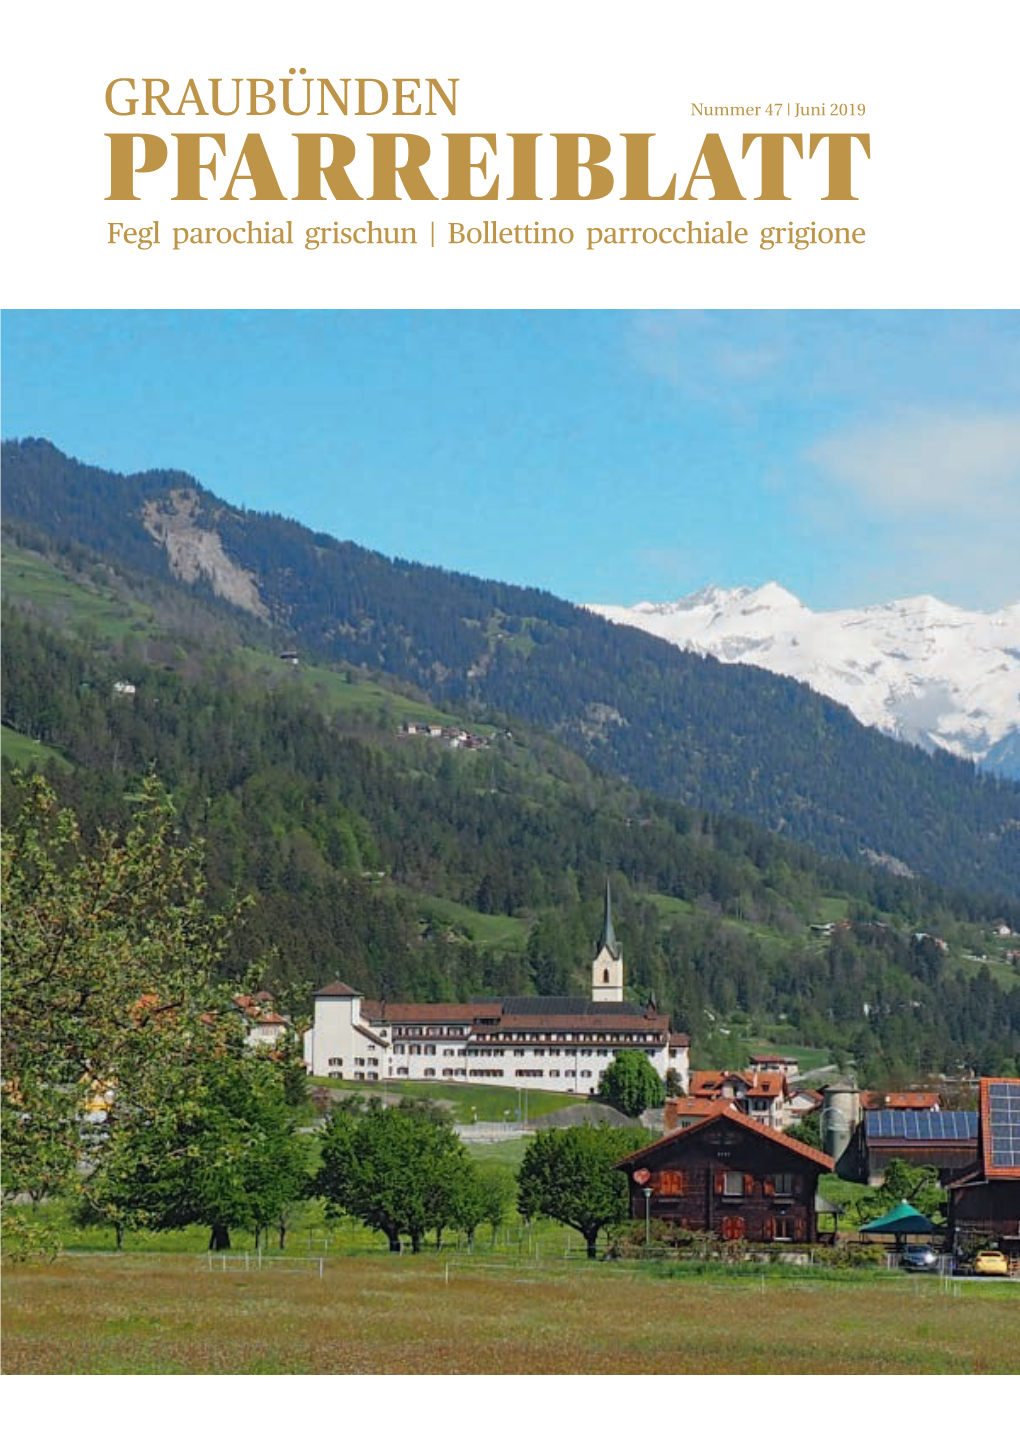 Pfarreiblatt Fegl Parochial Grischun | Bollettino Parrocchiale Grigione 2 Pfarreiblatt Graubünden | Juni 2019